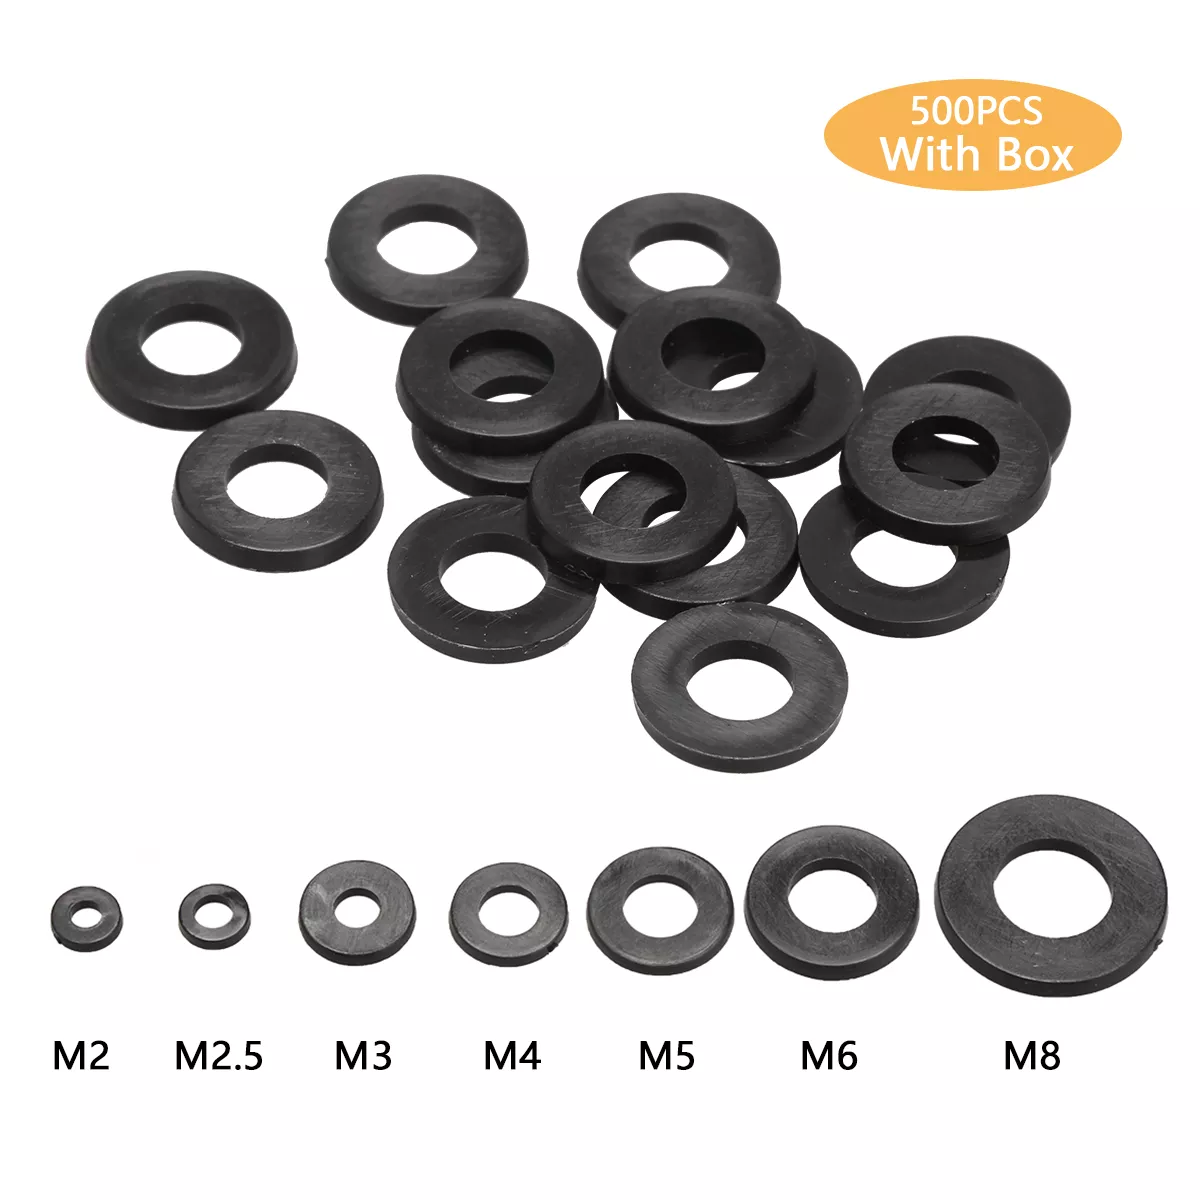 M2 M2.5 M3 M4 M5 M6 M8 Nylon Washers Plastic Insulation Spacers Seals Black White 250/350/480/500PCS Set Gasket Ring Kit